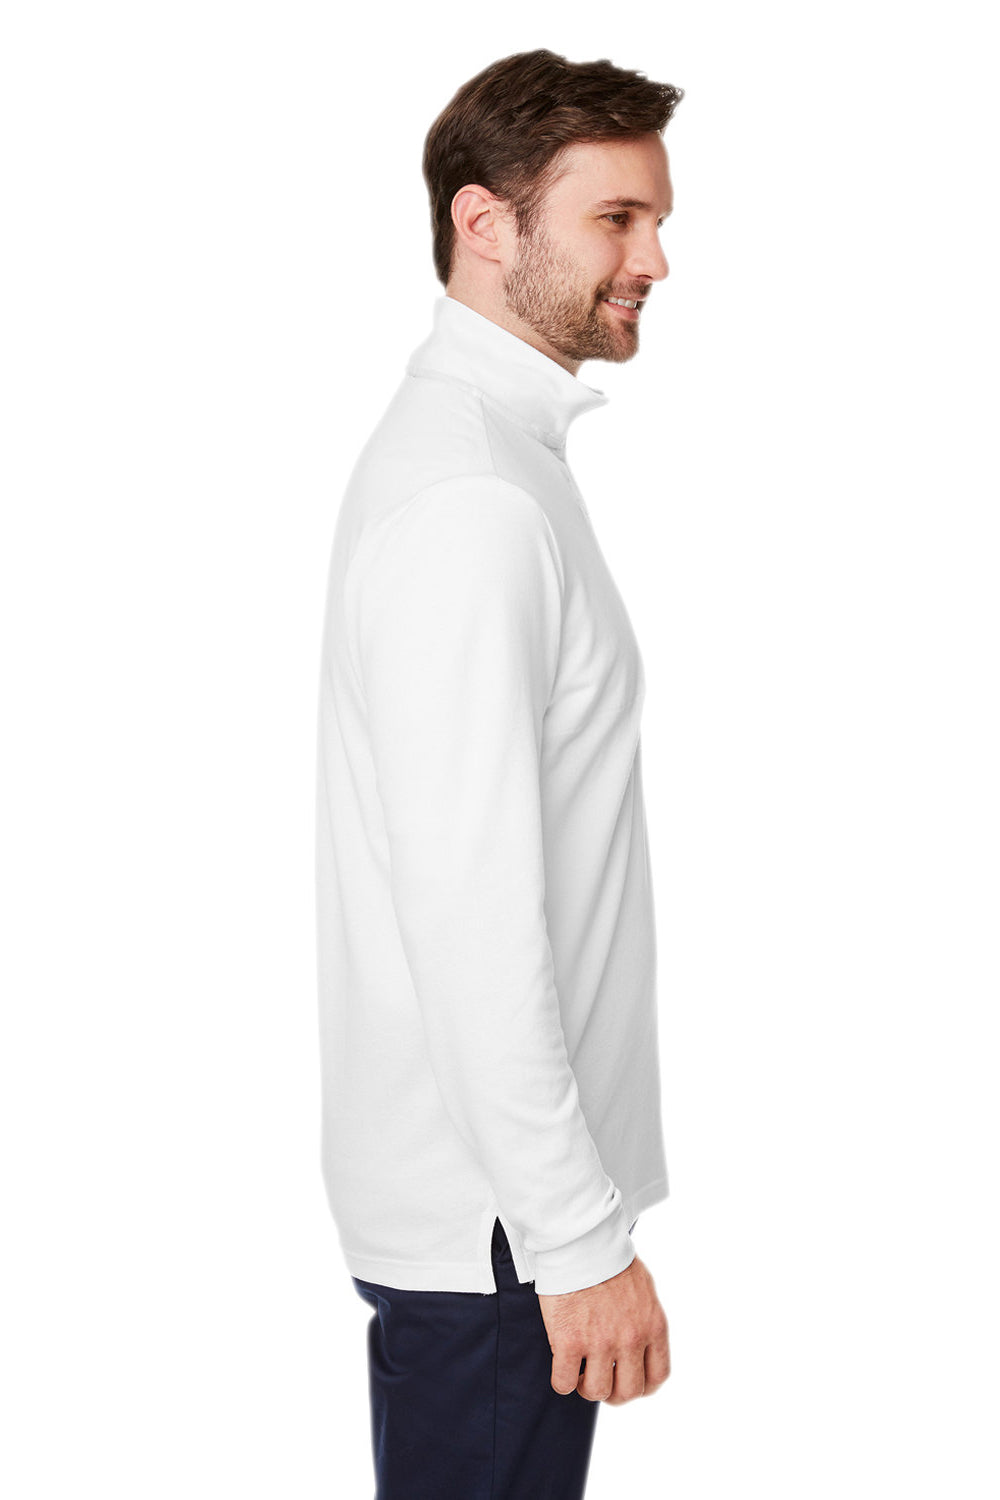 Devon & Jones DG400 Mens New Classics Performance Moisture Wicking 1/4 Zip Sweatshirt White Side